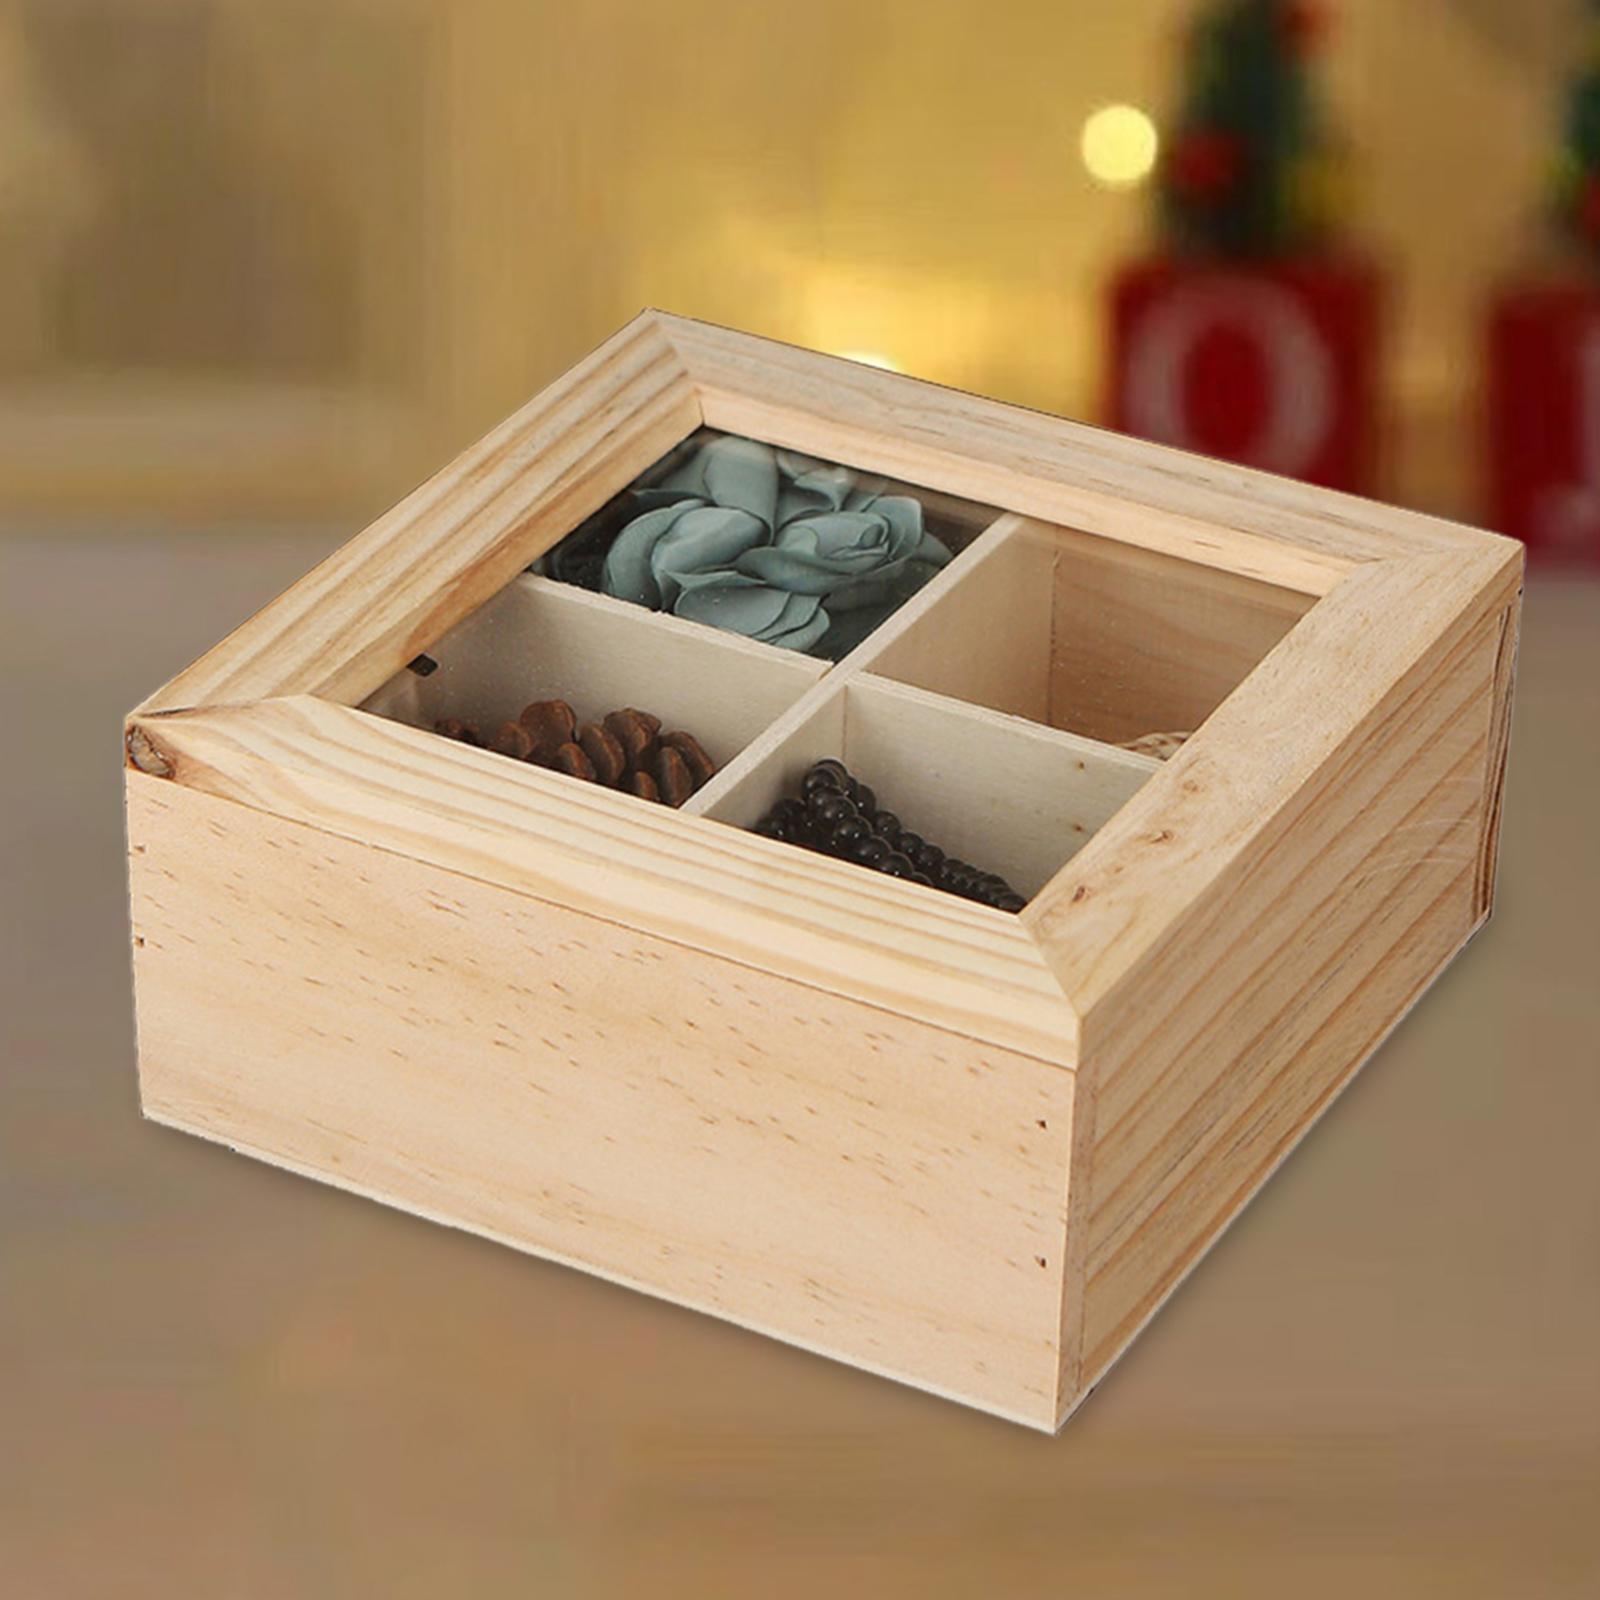 Wooden Storage Box Jewelry Box Jewelry Display Case with Glass Cover Storage Gift Box Keepsake Trinket Box for Crafts Gadgets